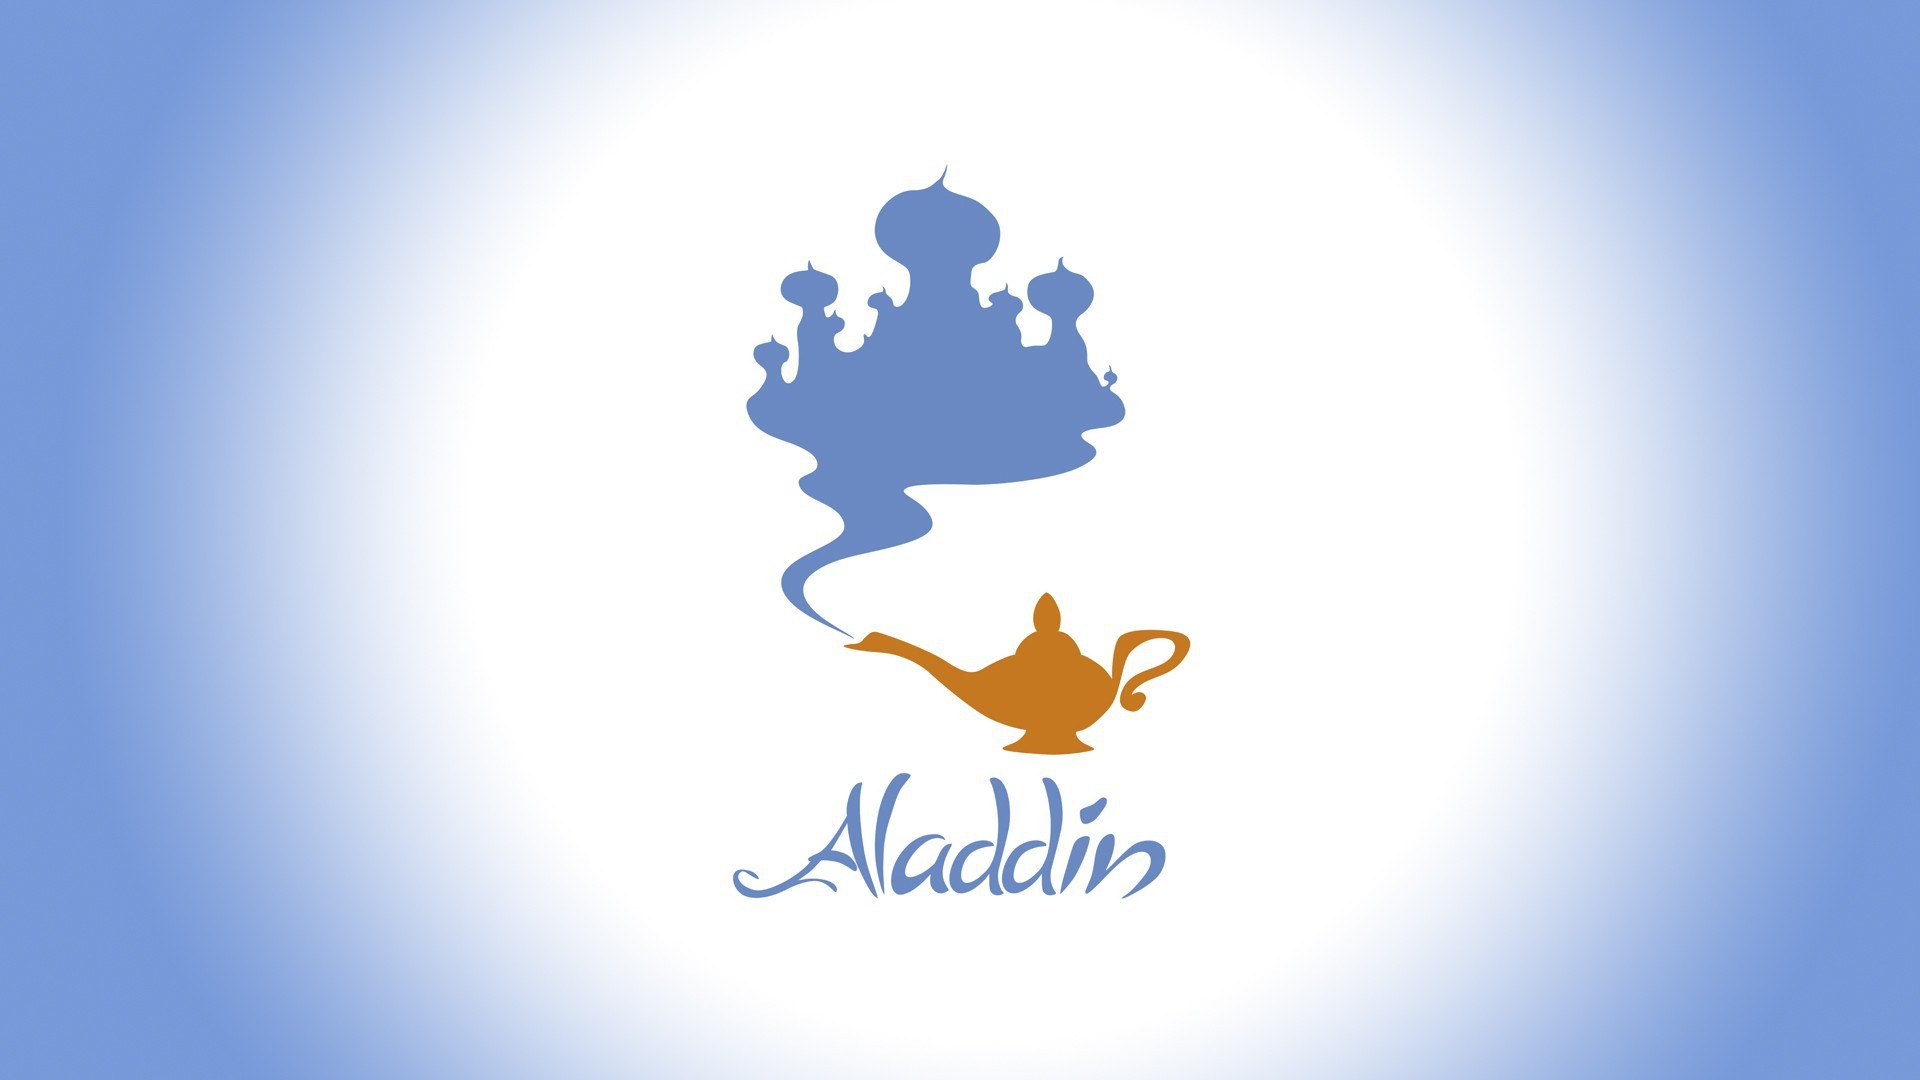 The Sultans Palace Aladdin Cartoon Walt Disney Hd Wallpaper 1920x1080   Wallpapers13com